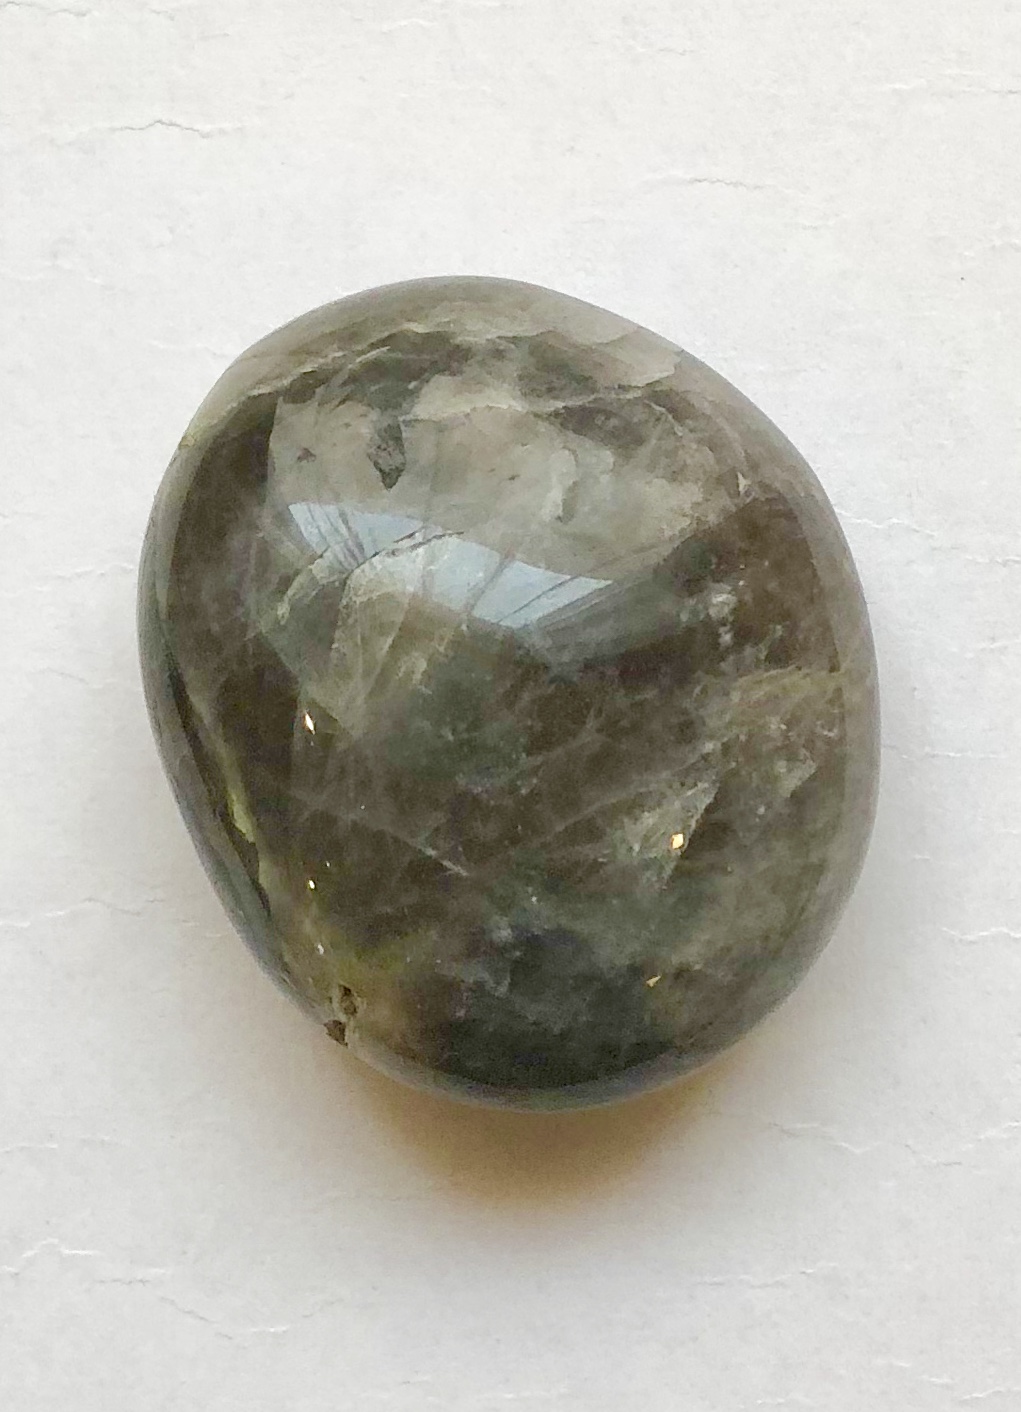 Black Moonstone Pebbles